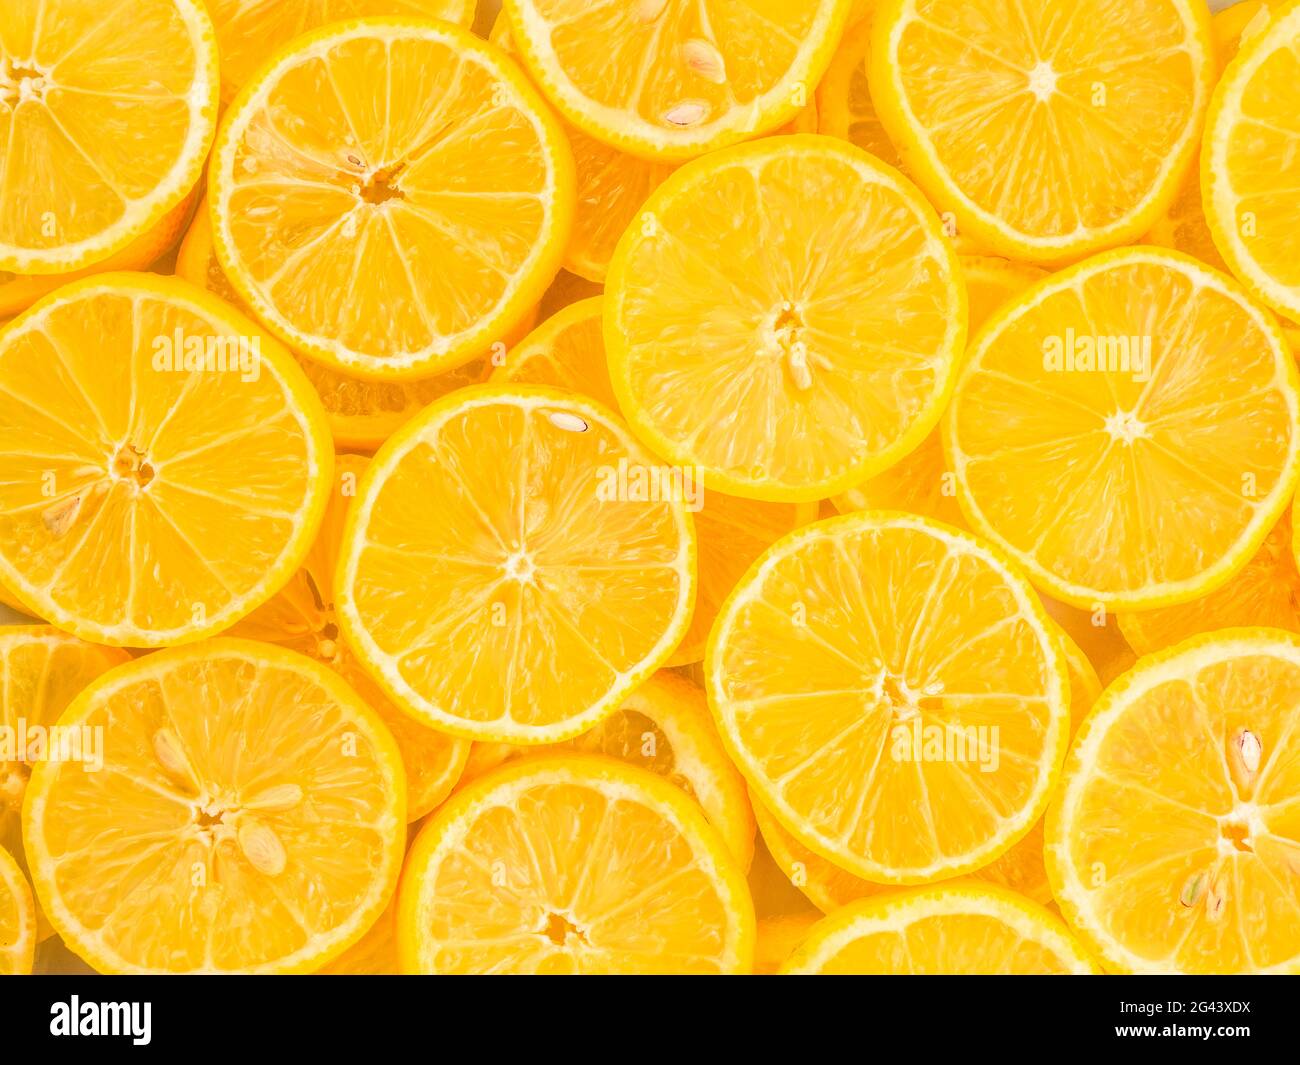 Cadre complet de citrons jaunes en tranches Banque D'Images